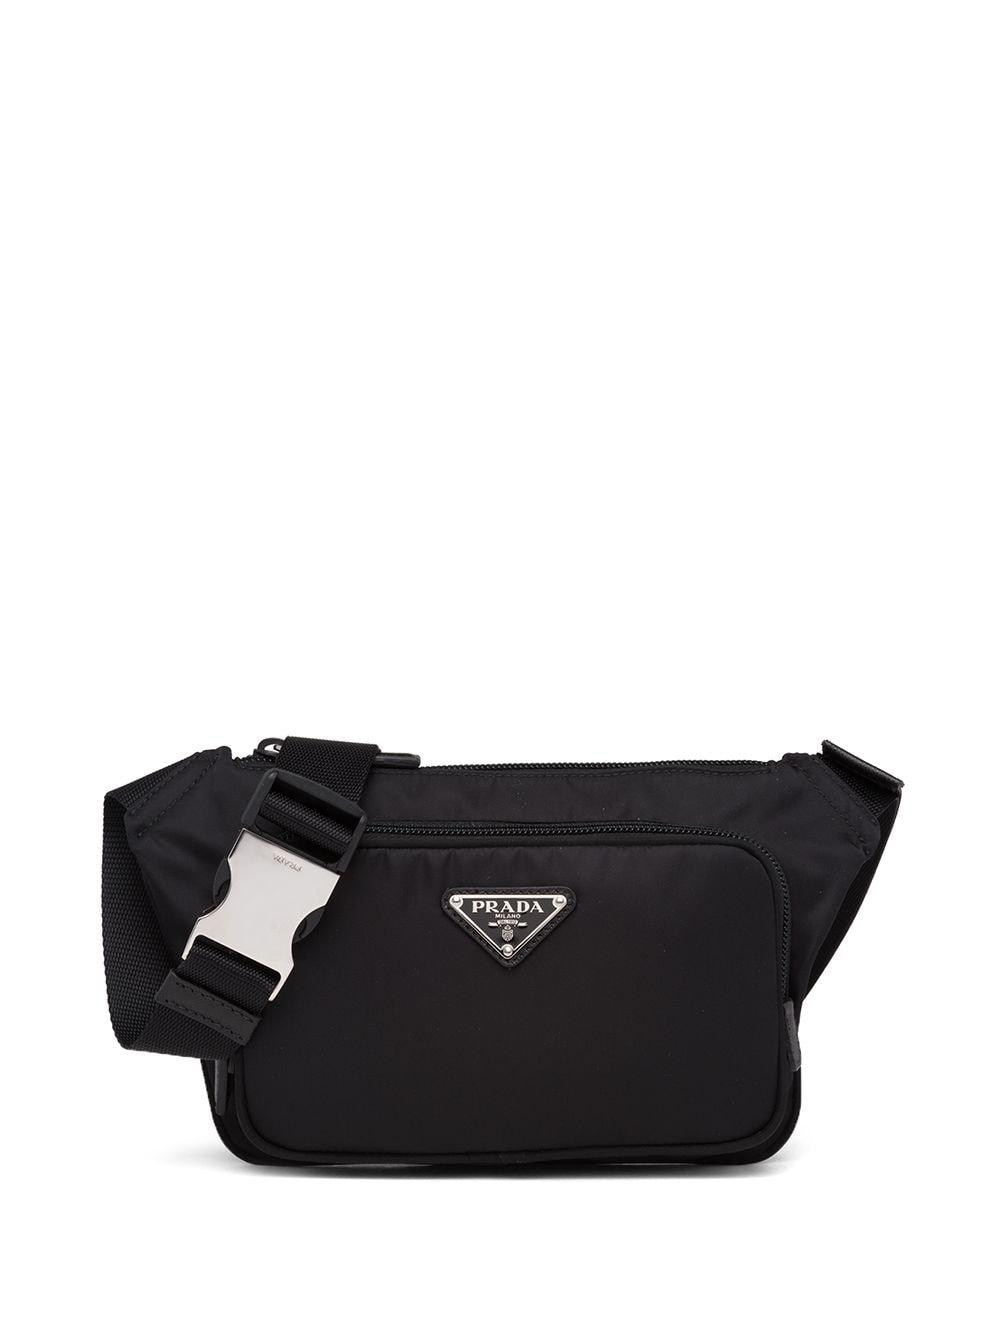 Prada Synthetic Re-nylon Shoulder Bag in Black for Men - Lyst